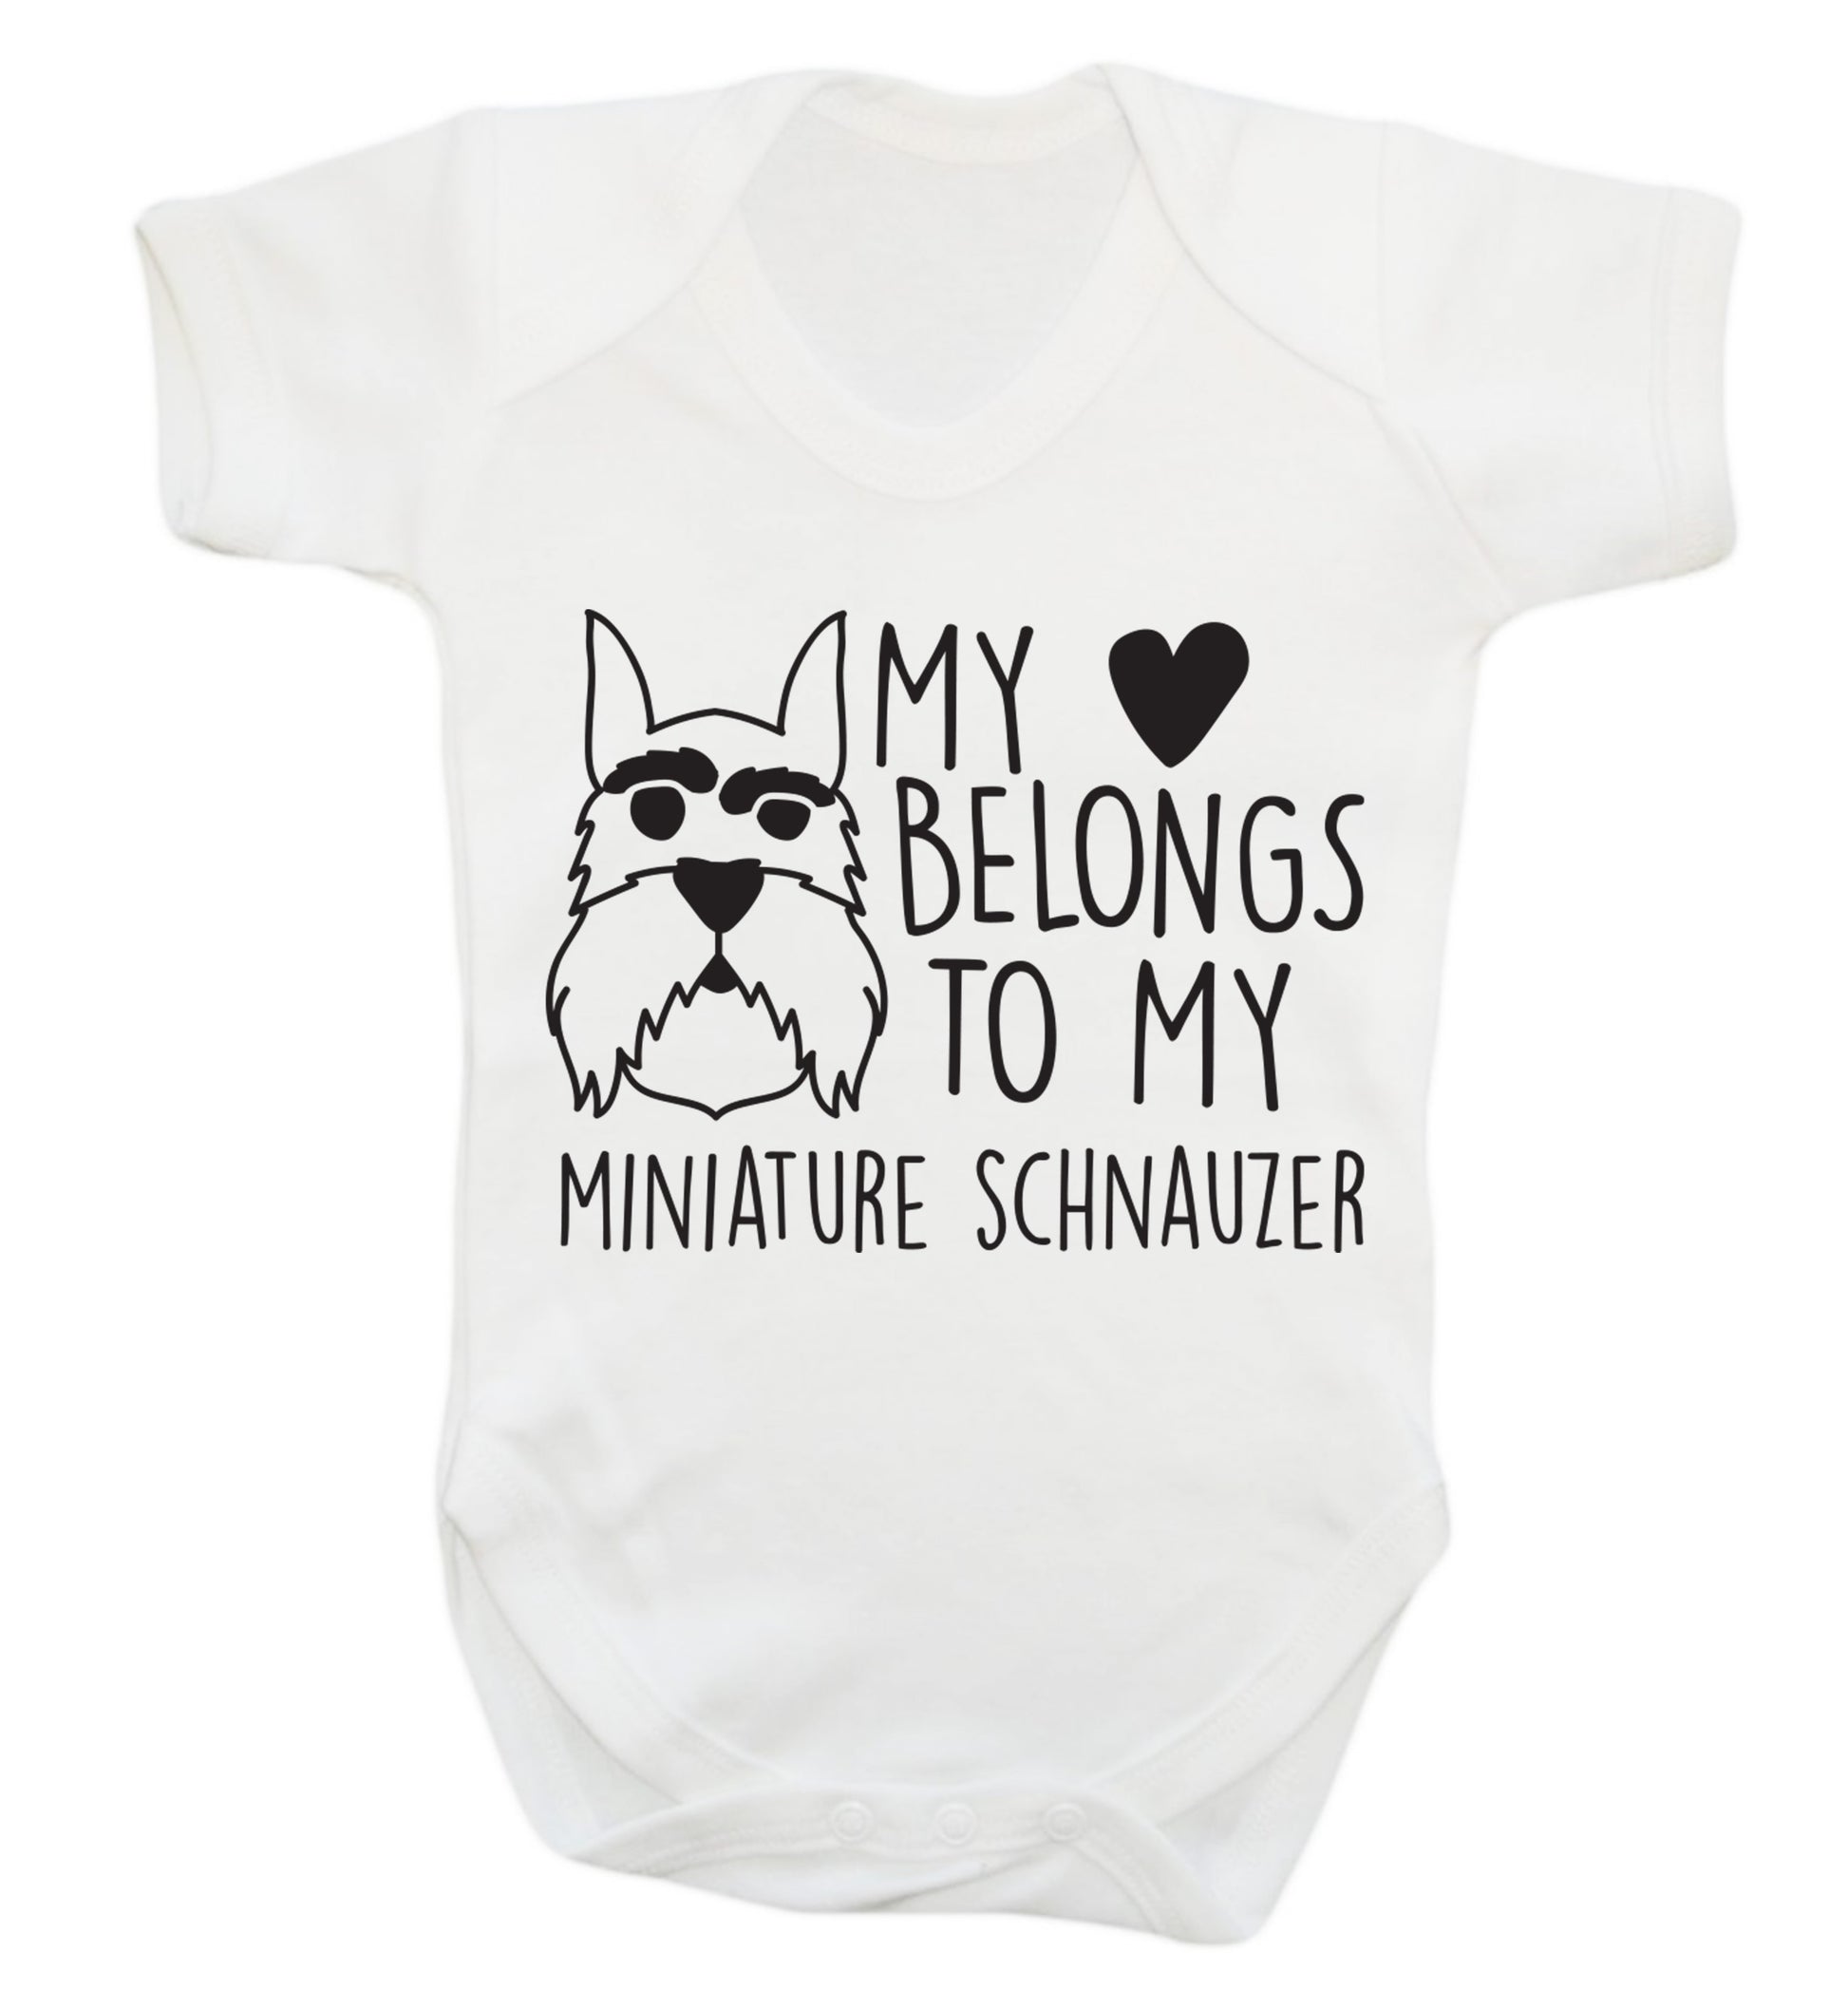 My heart belongs to my miniature schnauzer Baby Vest white 18-24 months